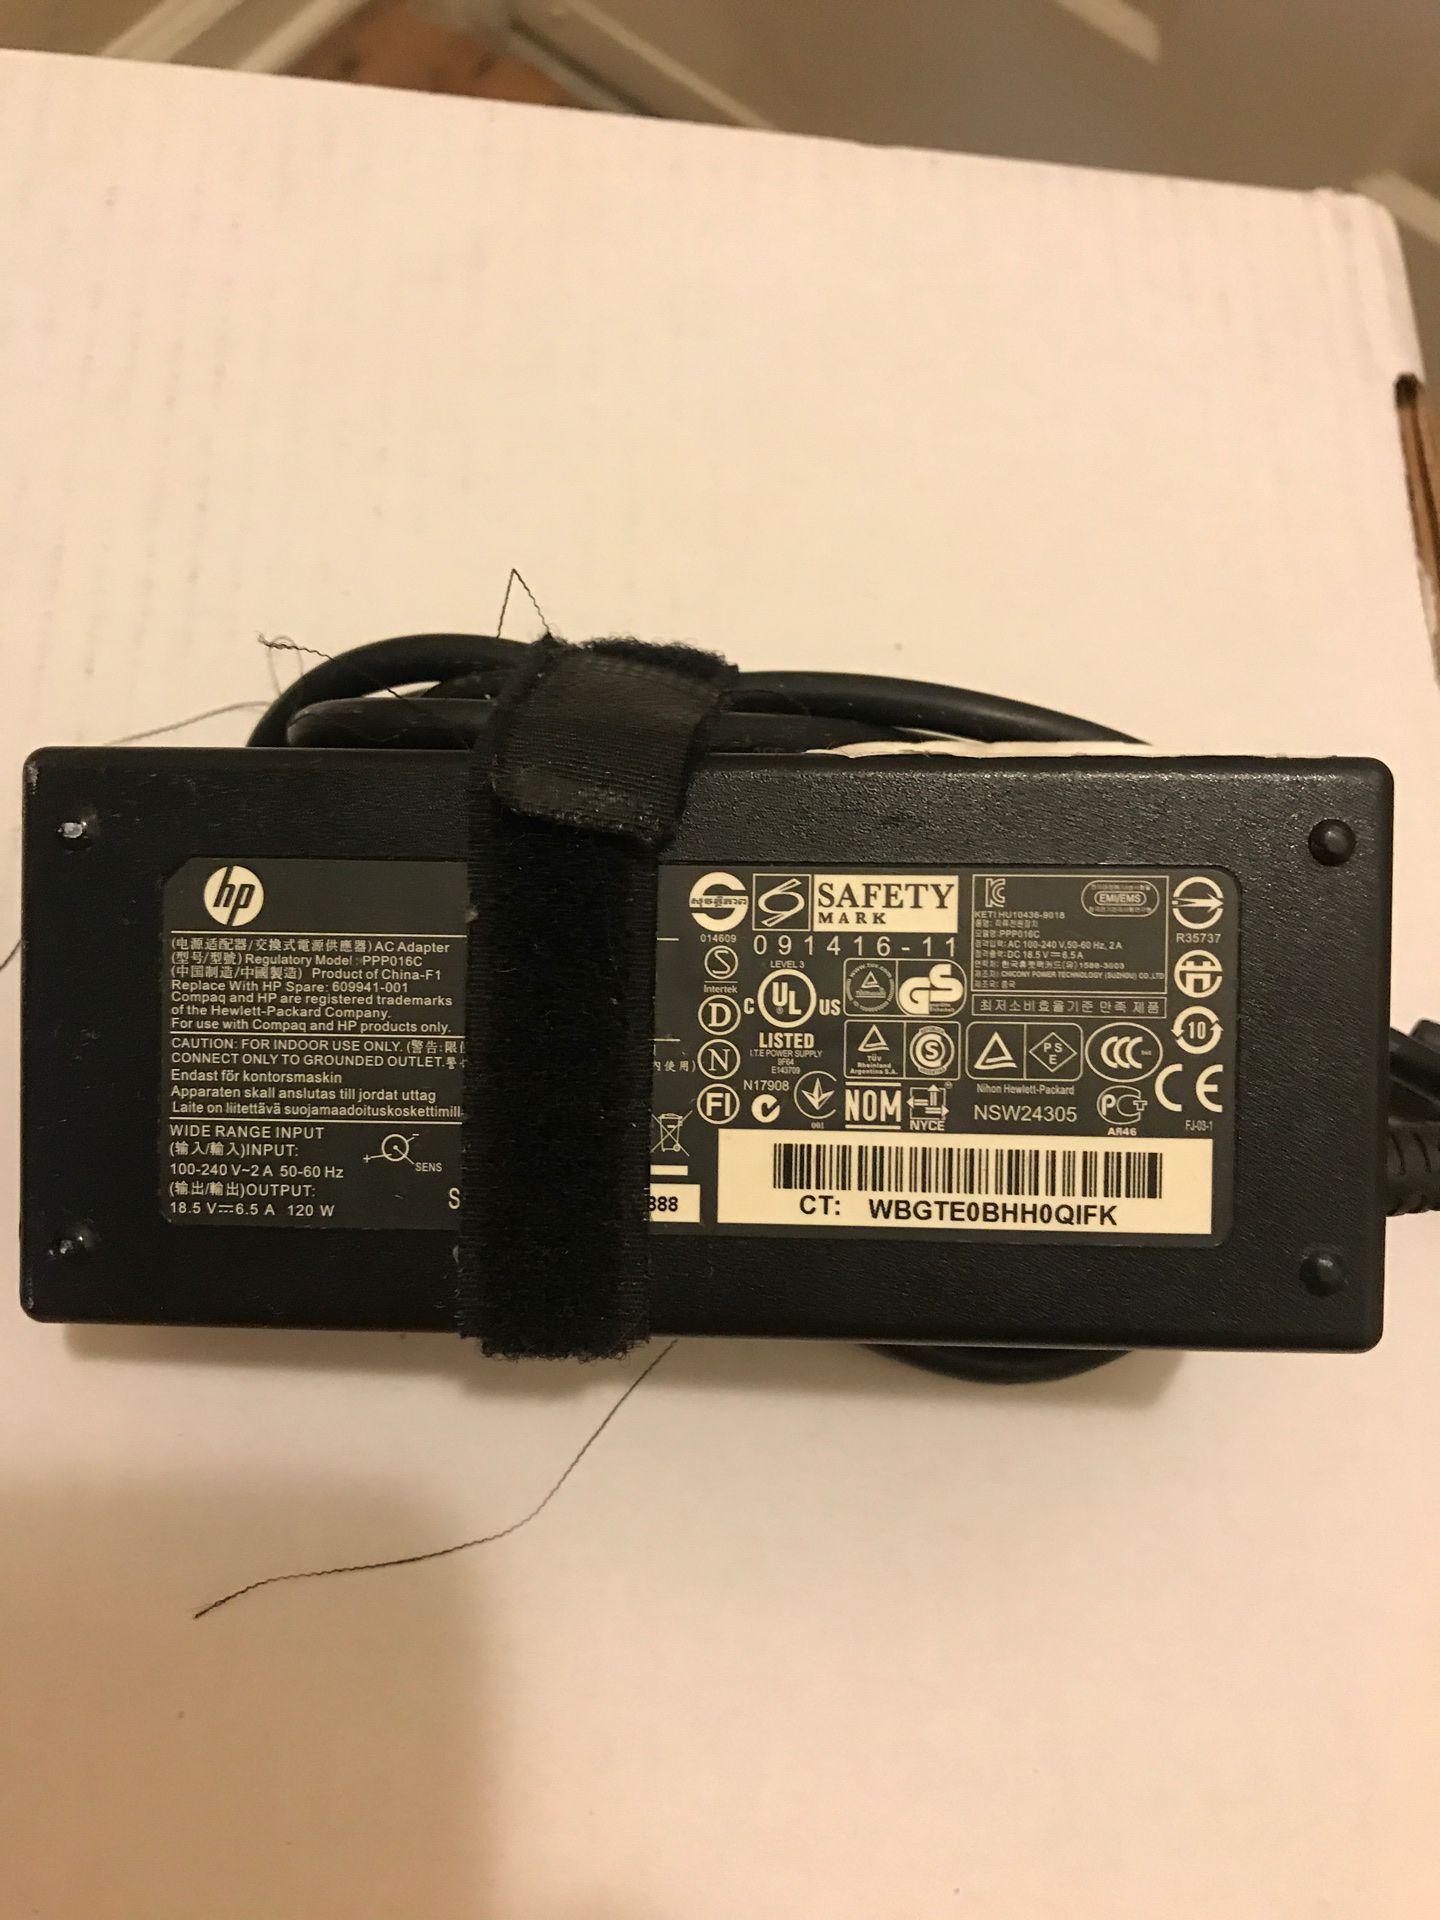 HP PPP016C power supply